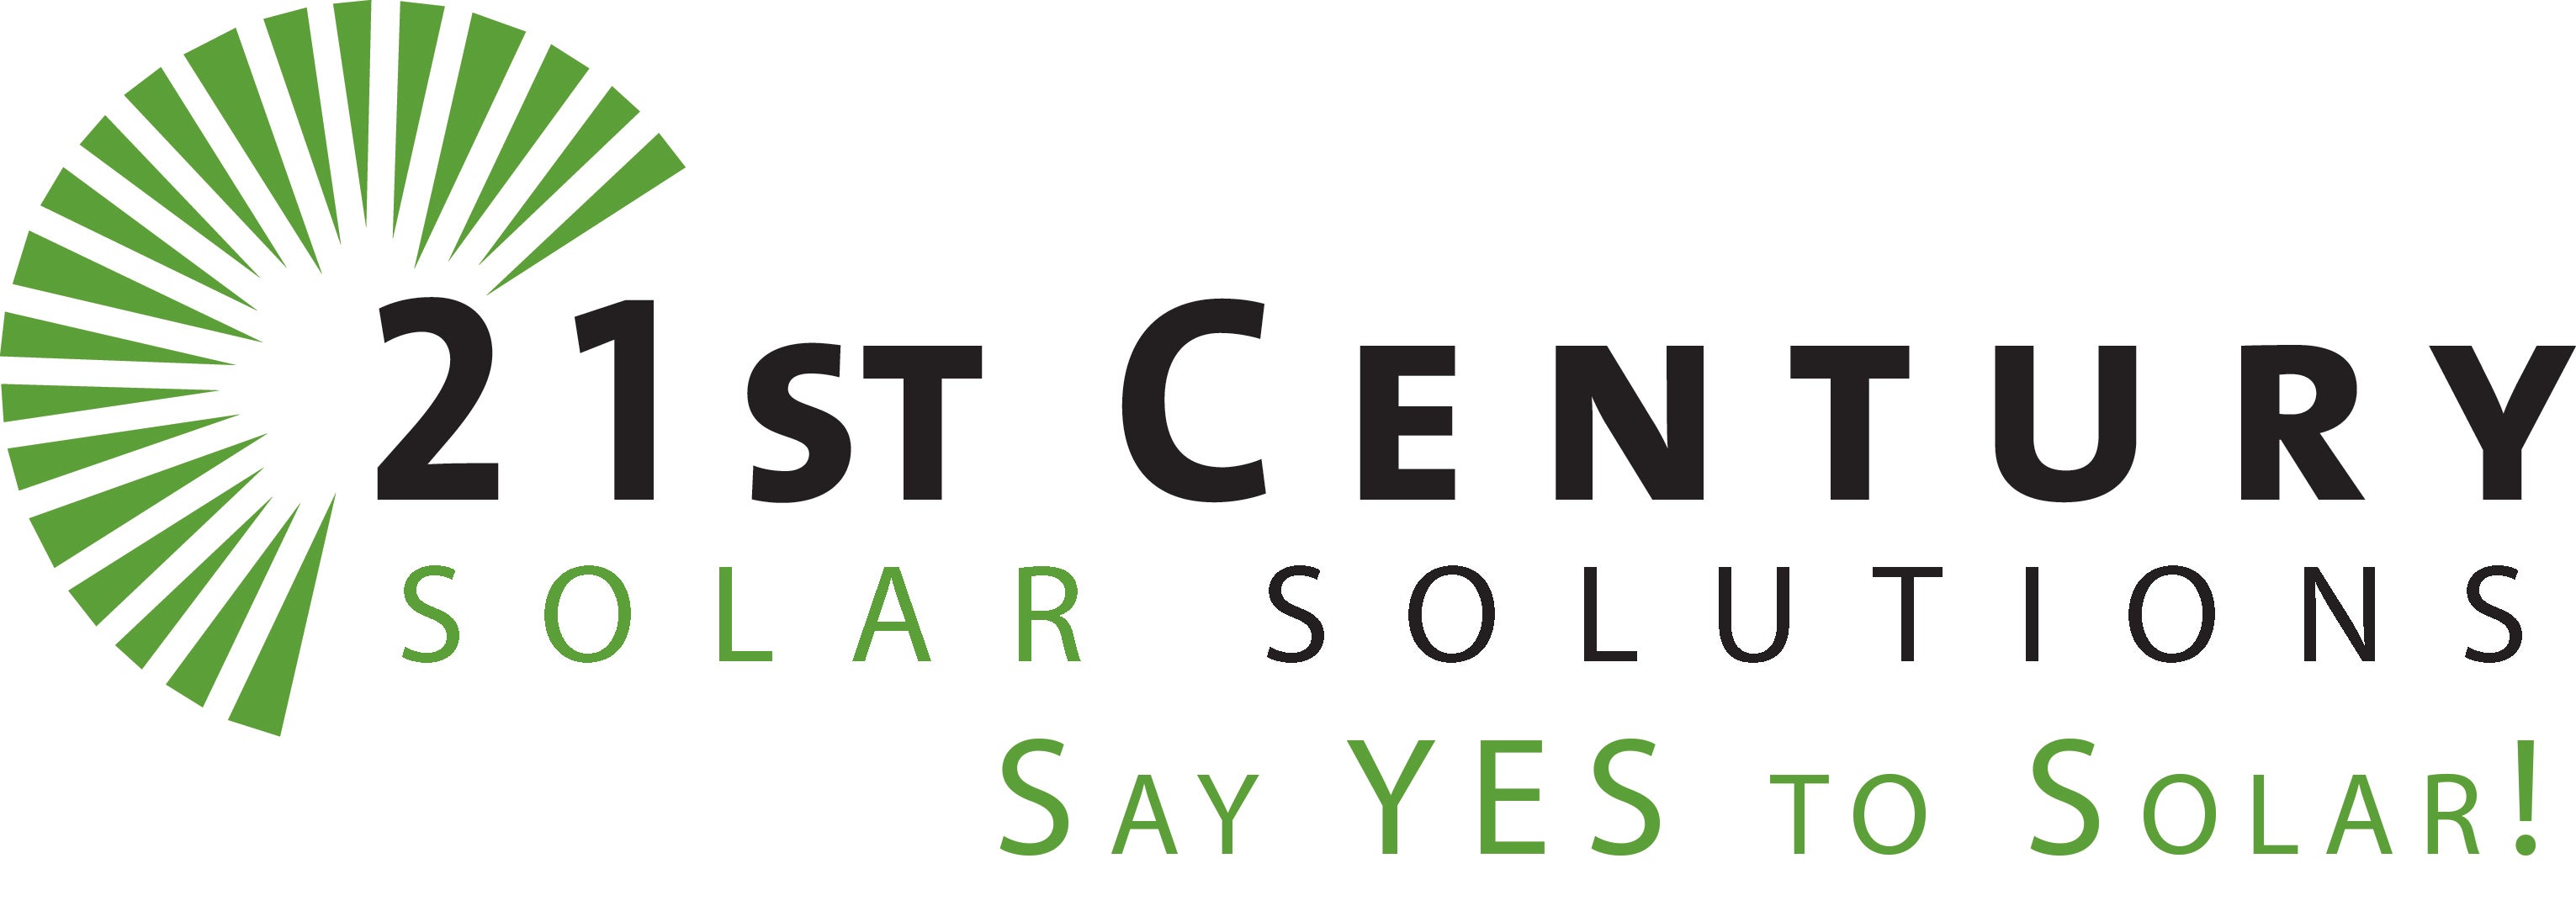 21st Century Power Solutions, LLC logo